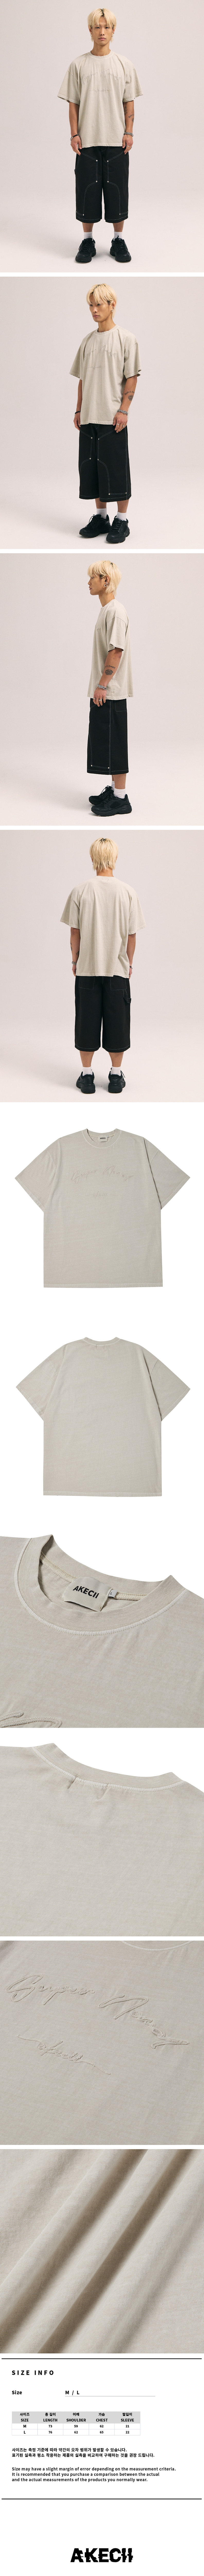 supernomal chain embroidery pigment half t-shirt-cream